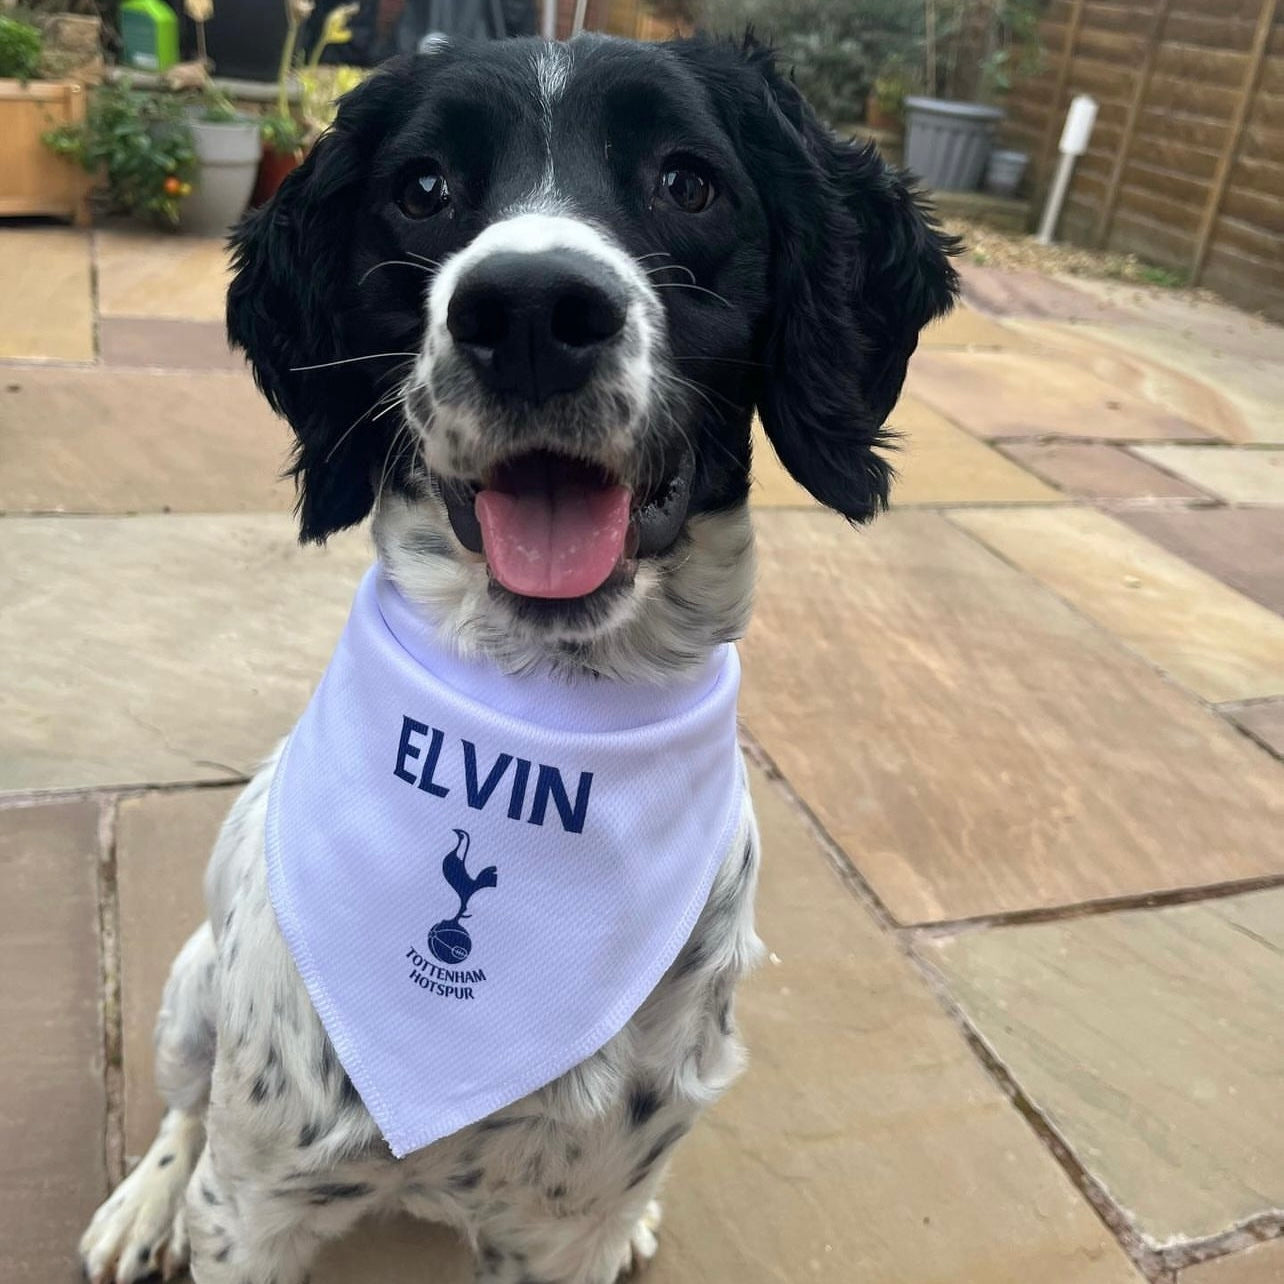 Spurs Personalised Dog Shirt